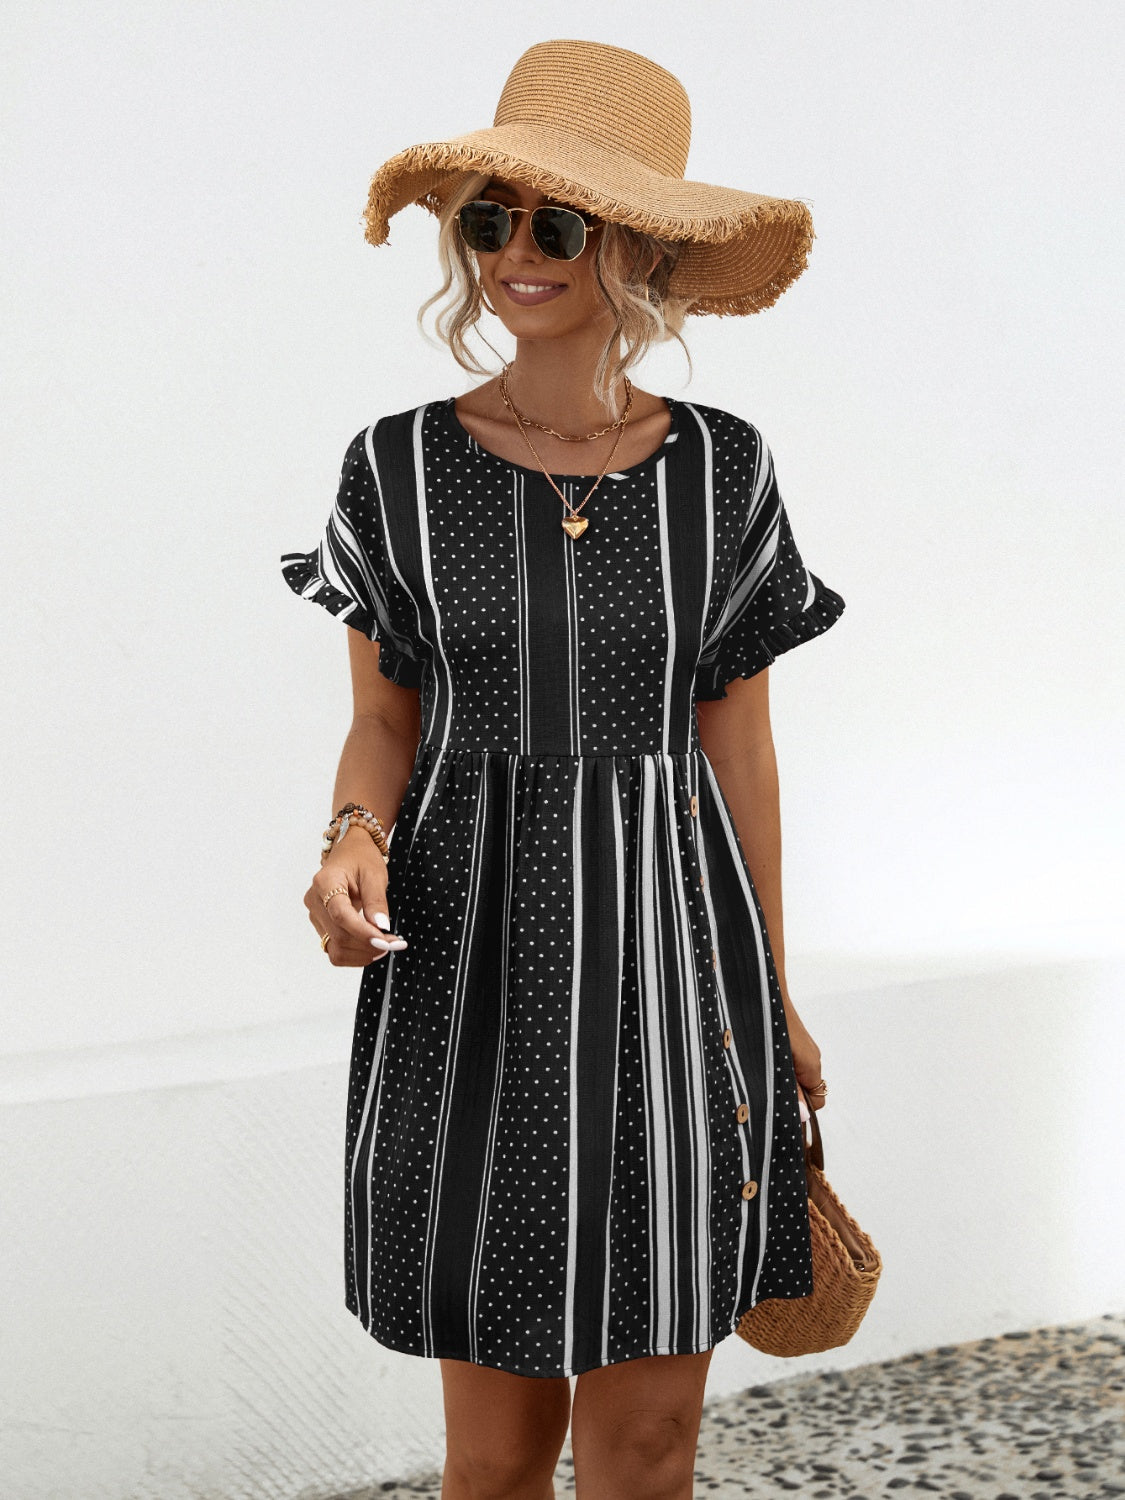 Chic Summer Beach Wedding Guest Dresses for Women Over 50: Striped Polka Dot Frill Short Sleeve Mini Dress